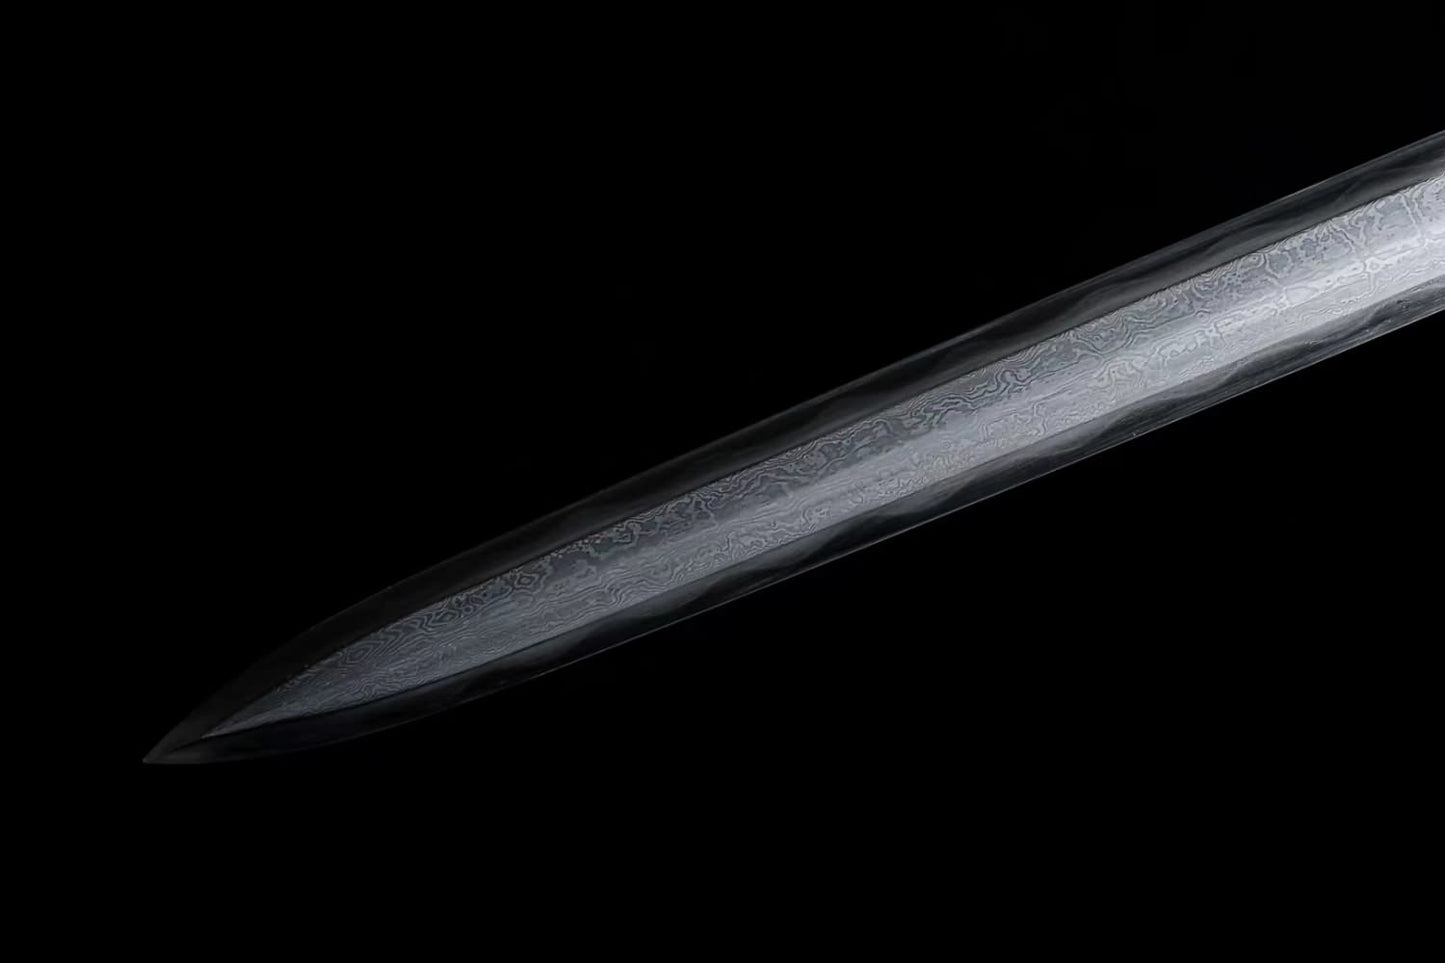 Han Sword, Damascus Steel Blade, Ebony Scabbard, Brass Dragon Fittings-Length 45”